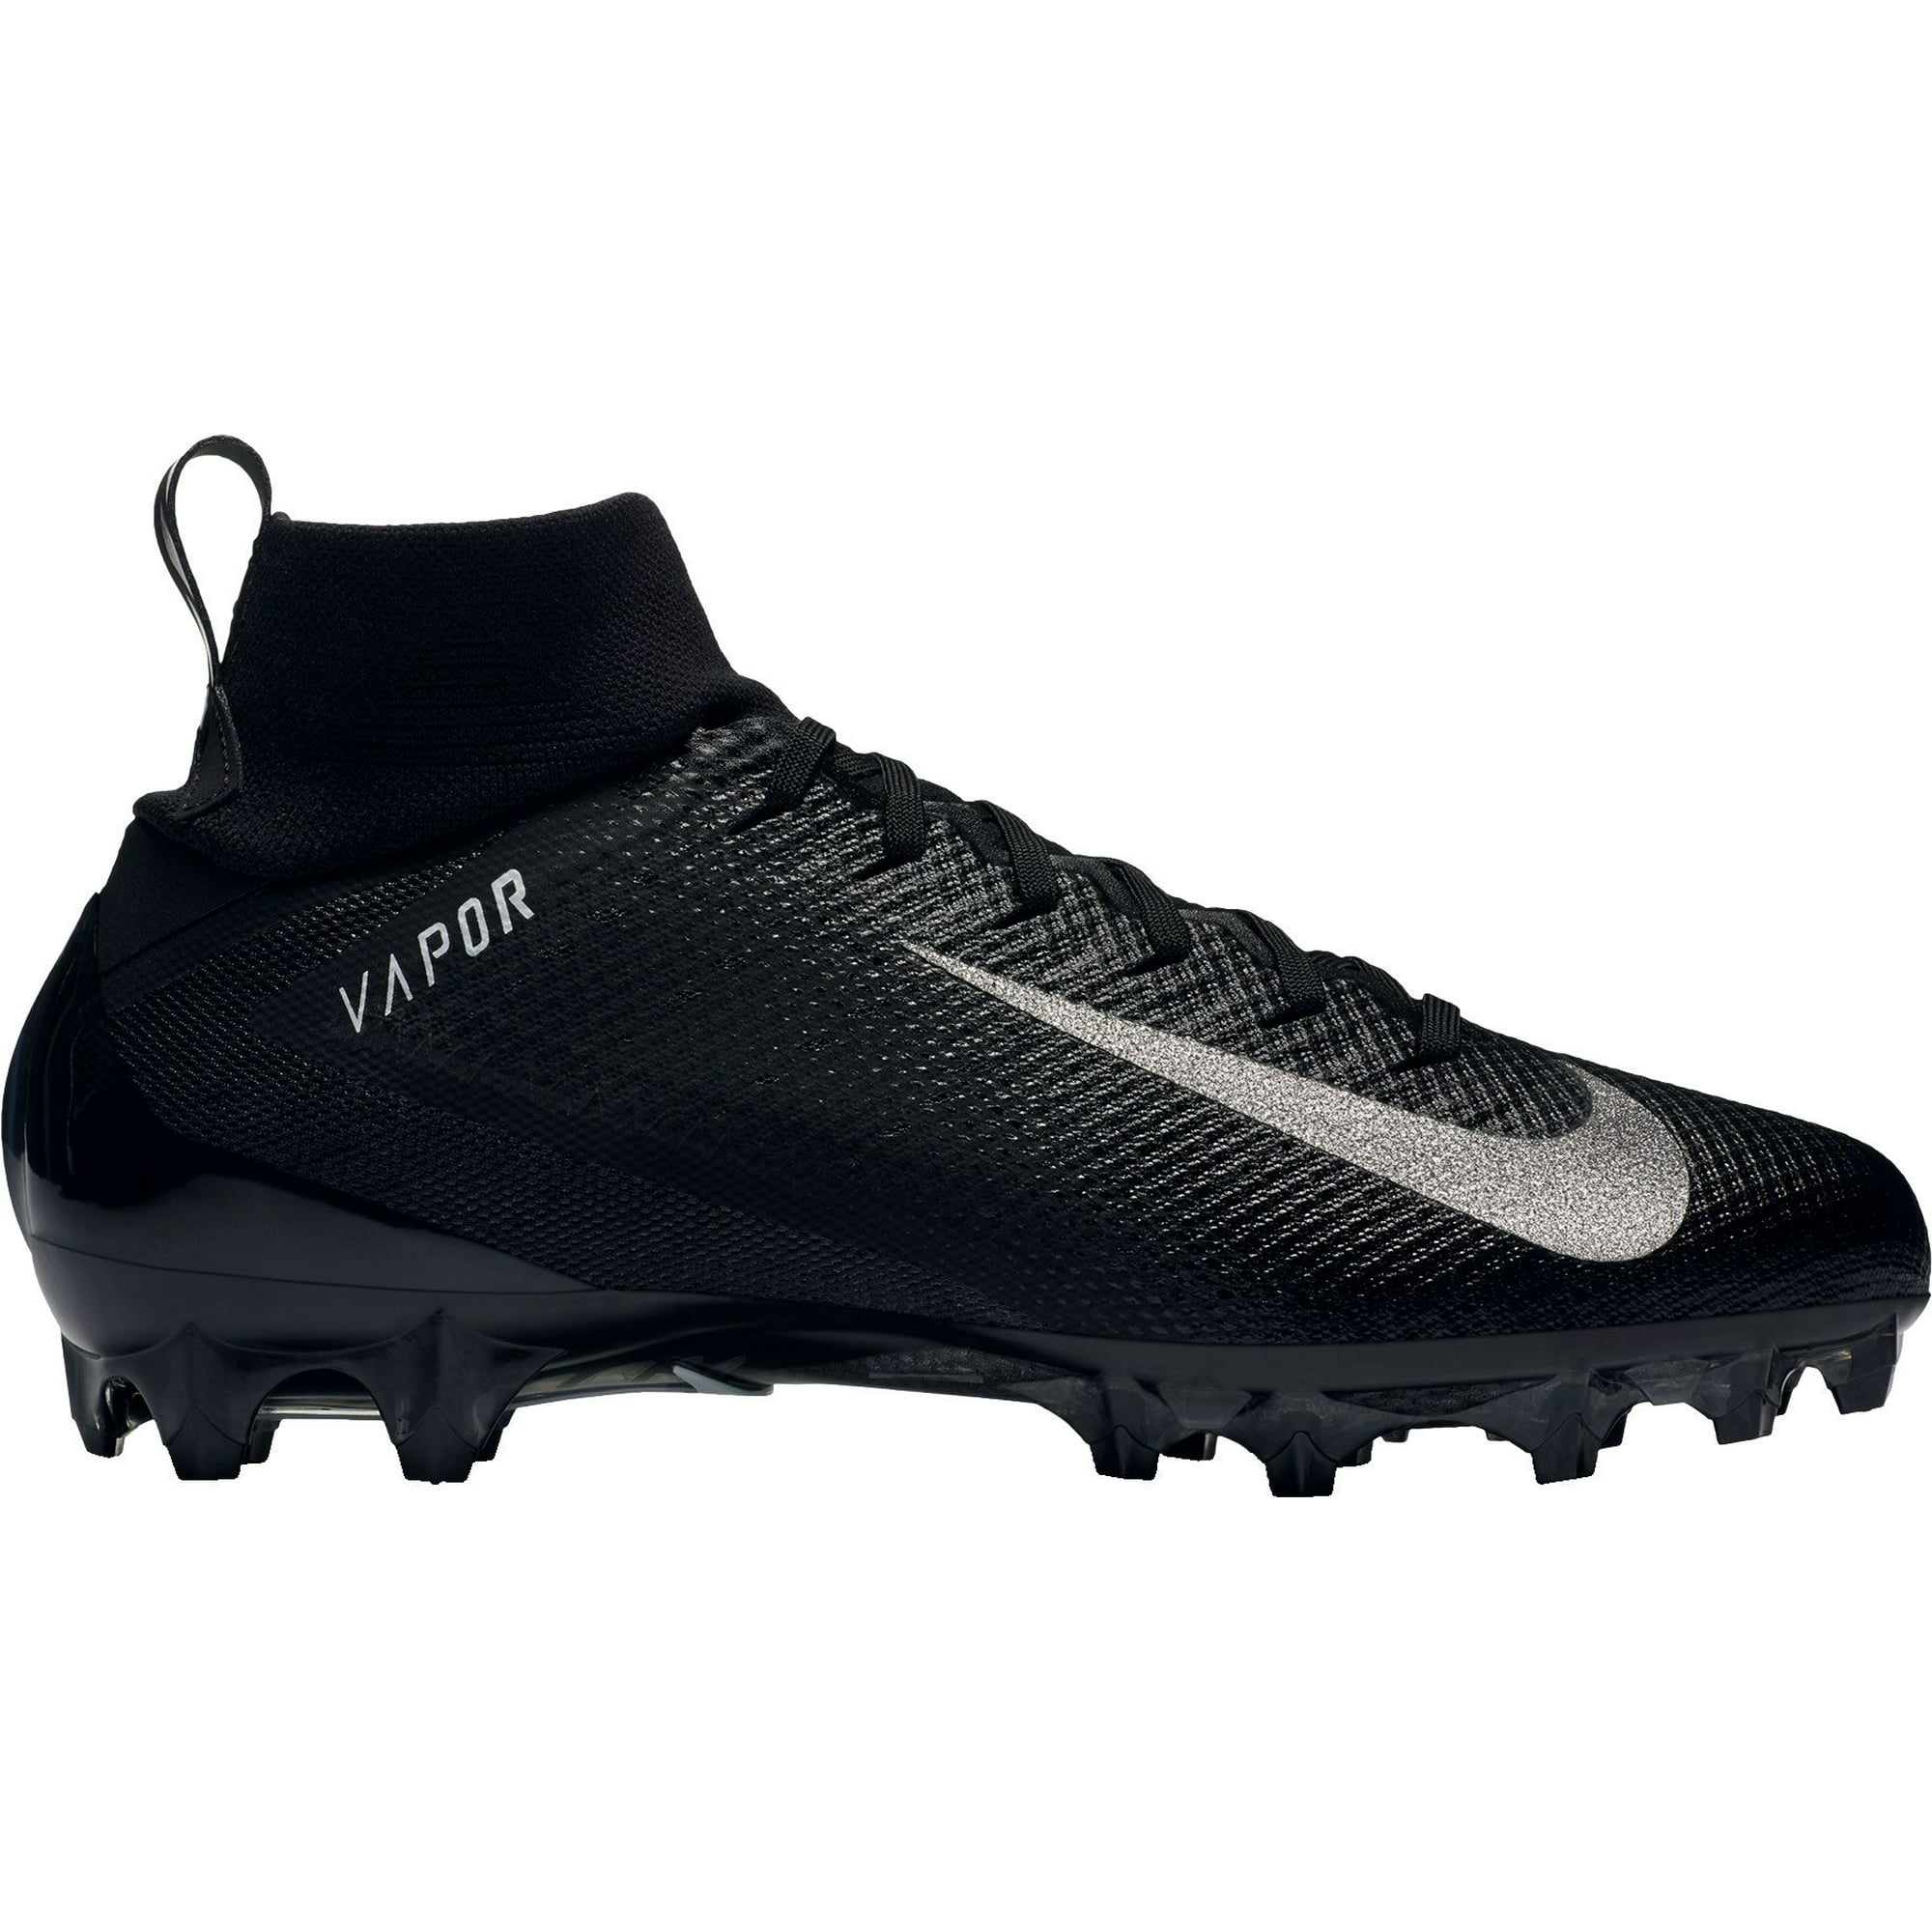 Nike Men's Vapor 3 Pro Football Black/White - Walmart.com